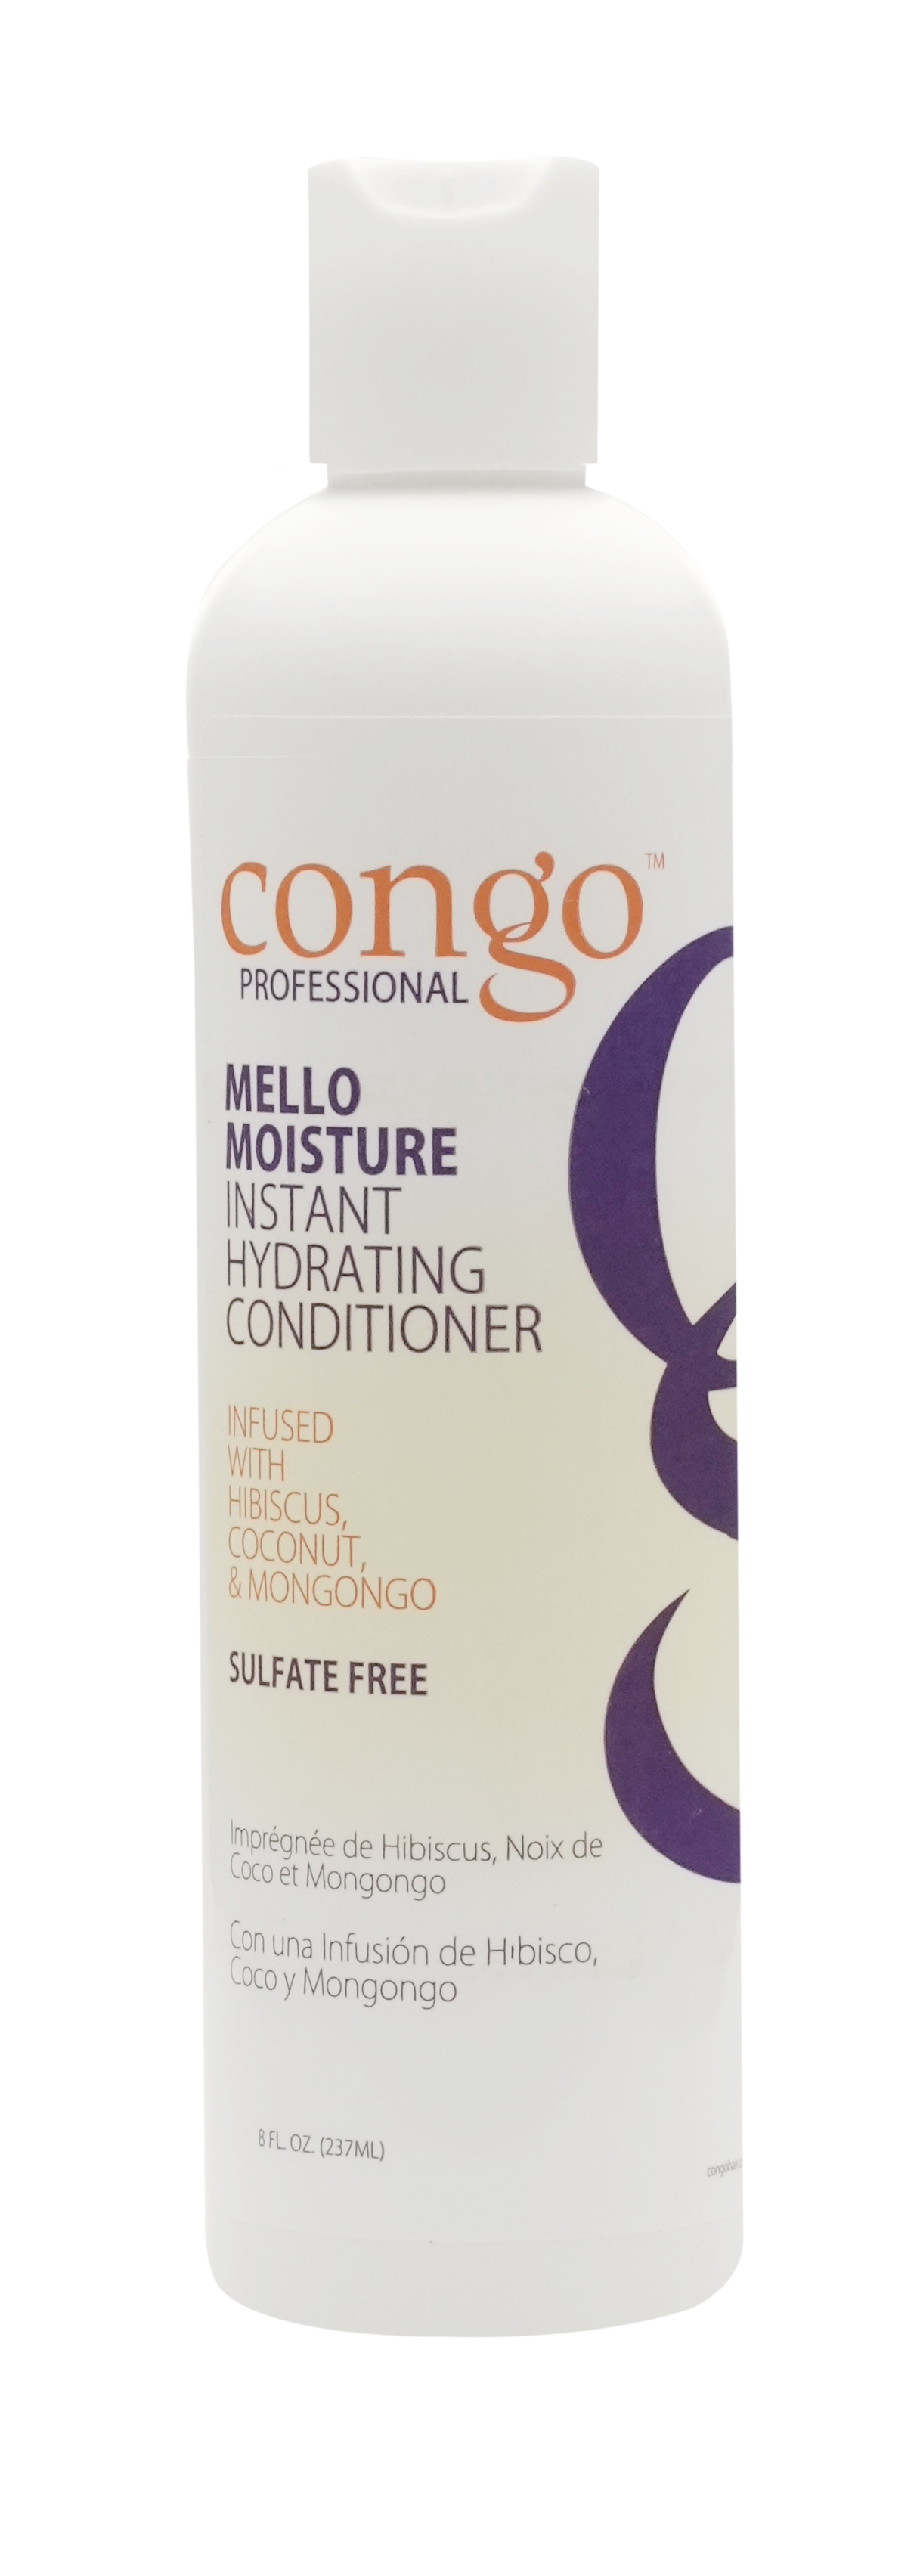 Congo - Mello Moisture - Instant Hydrating Conditioner 8oz|32oz|4Ibs